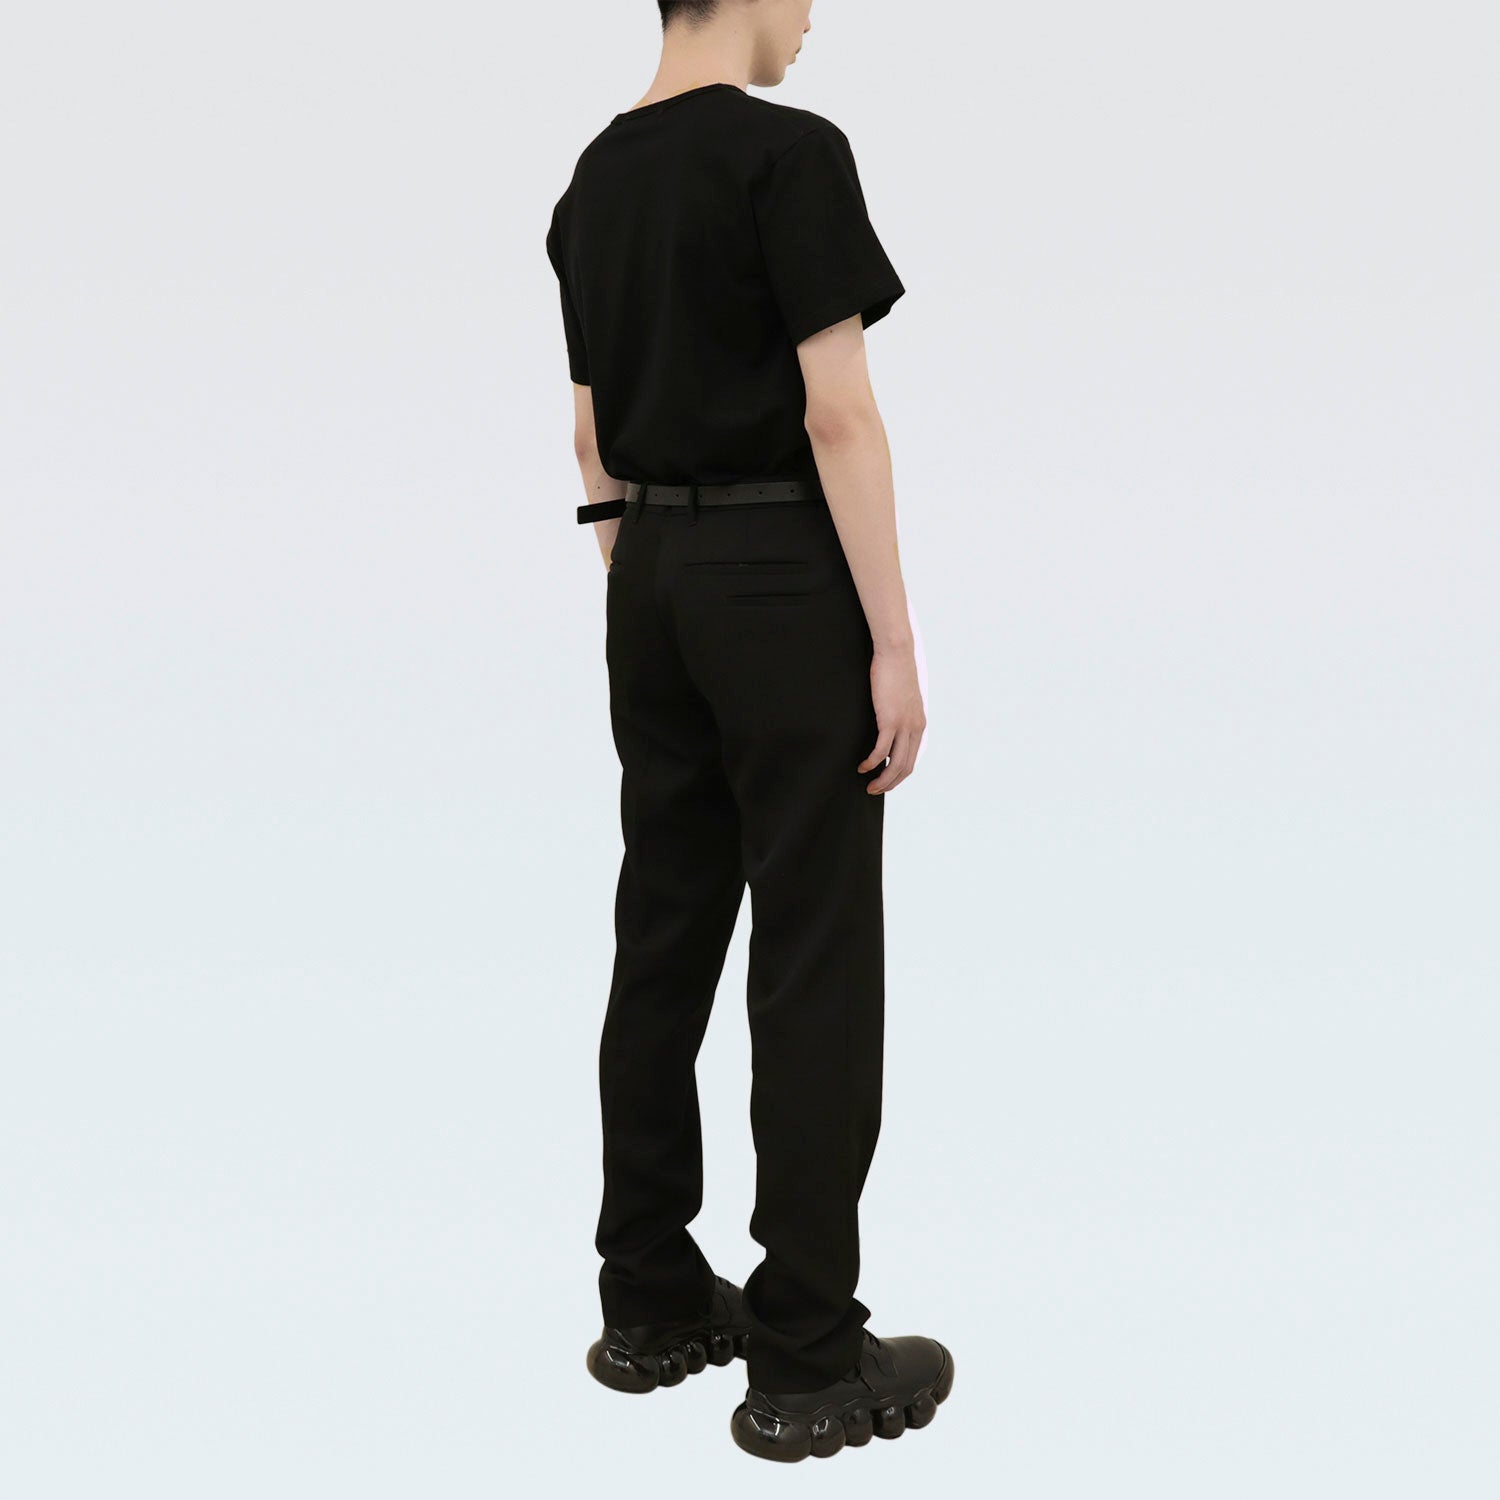 LOWITT / Slim Tailored Pants / black